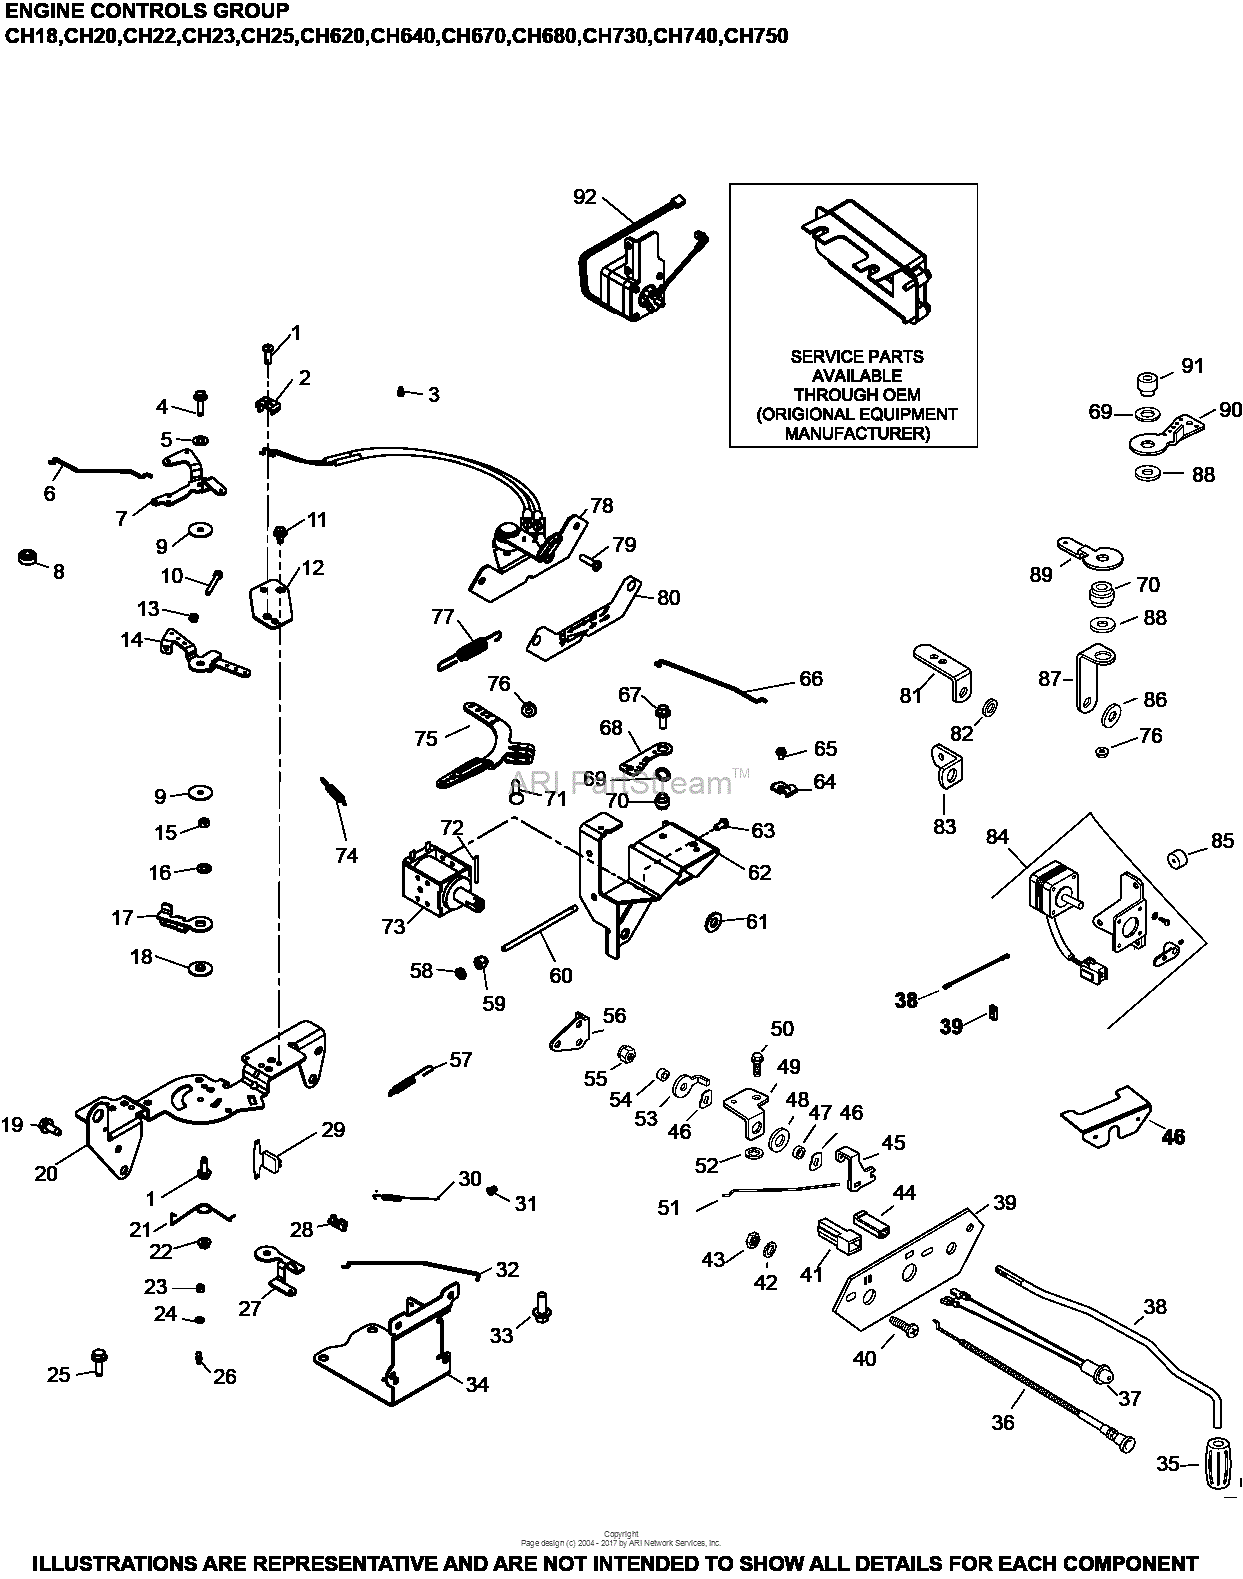 Kohler CH730-3319 LINCOLN RANER 23.5 HP (17.5 kW) Parts Diagram for